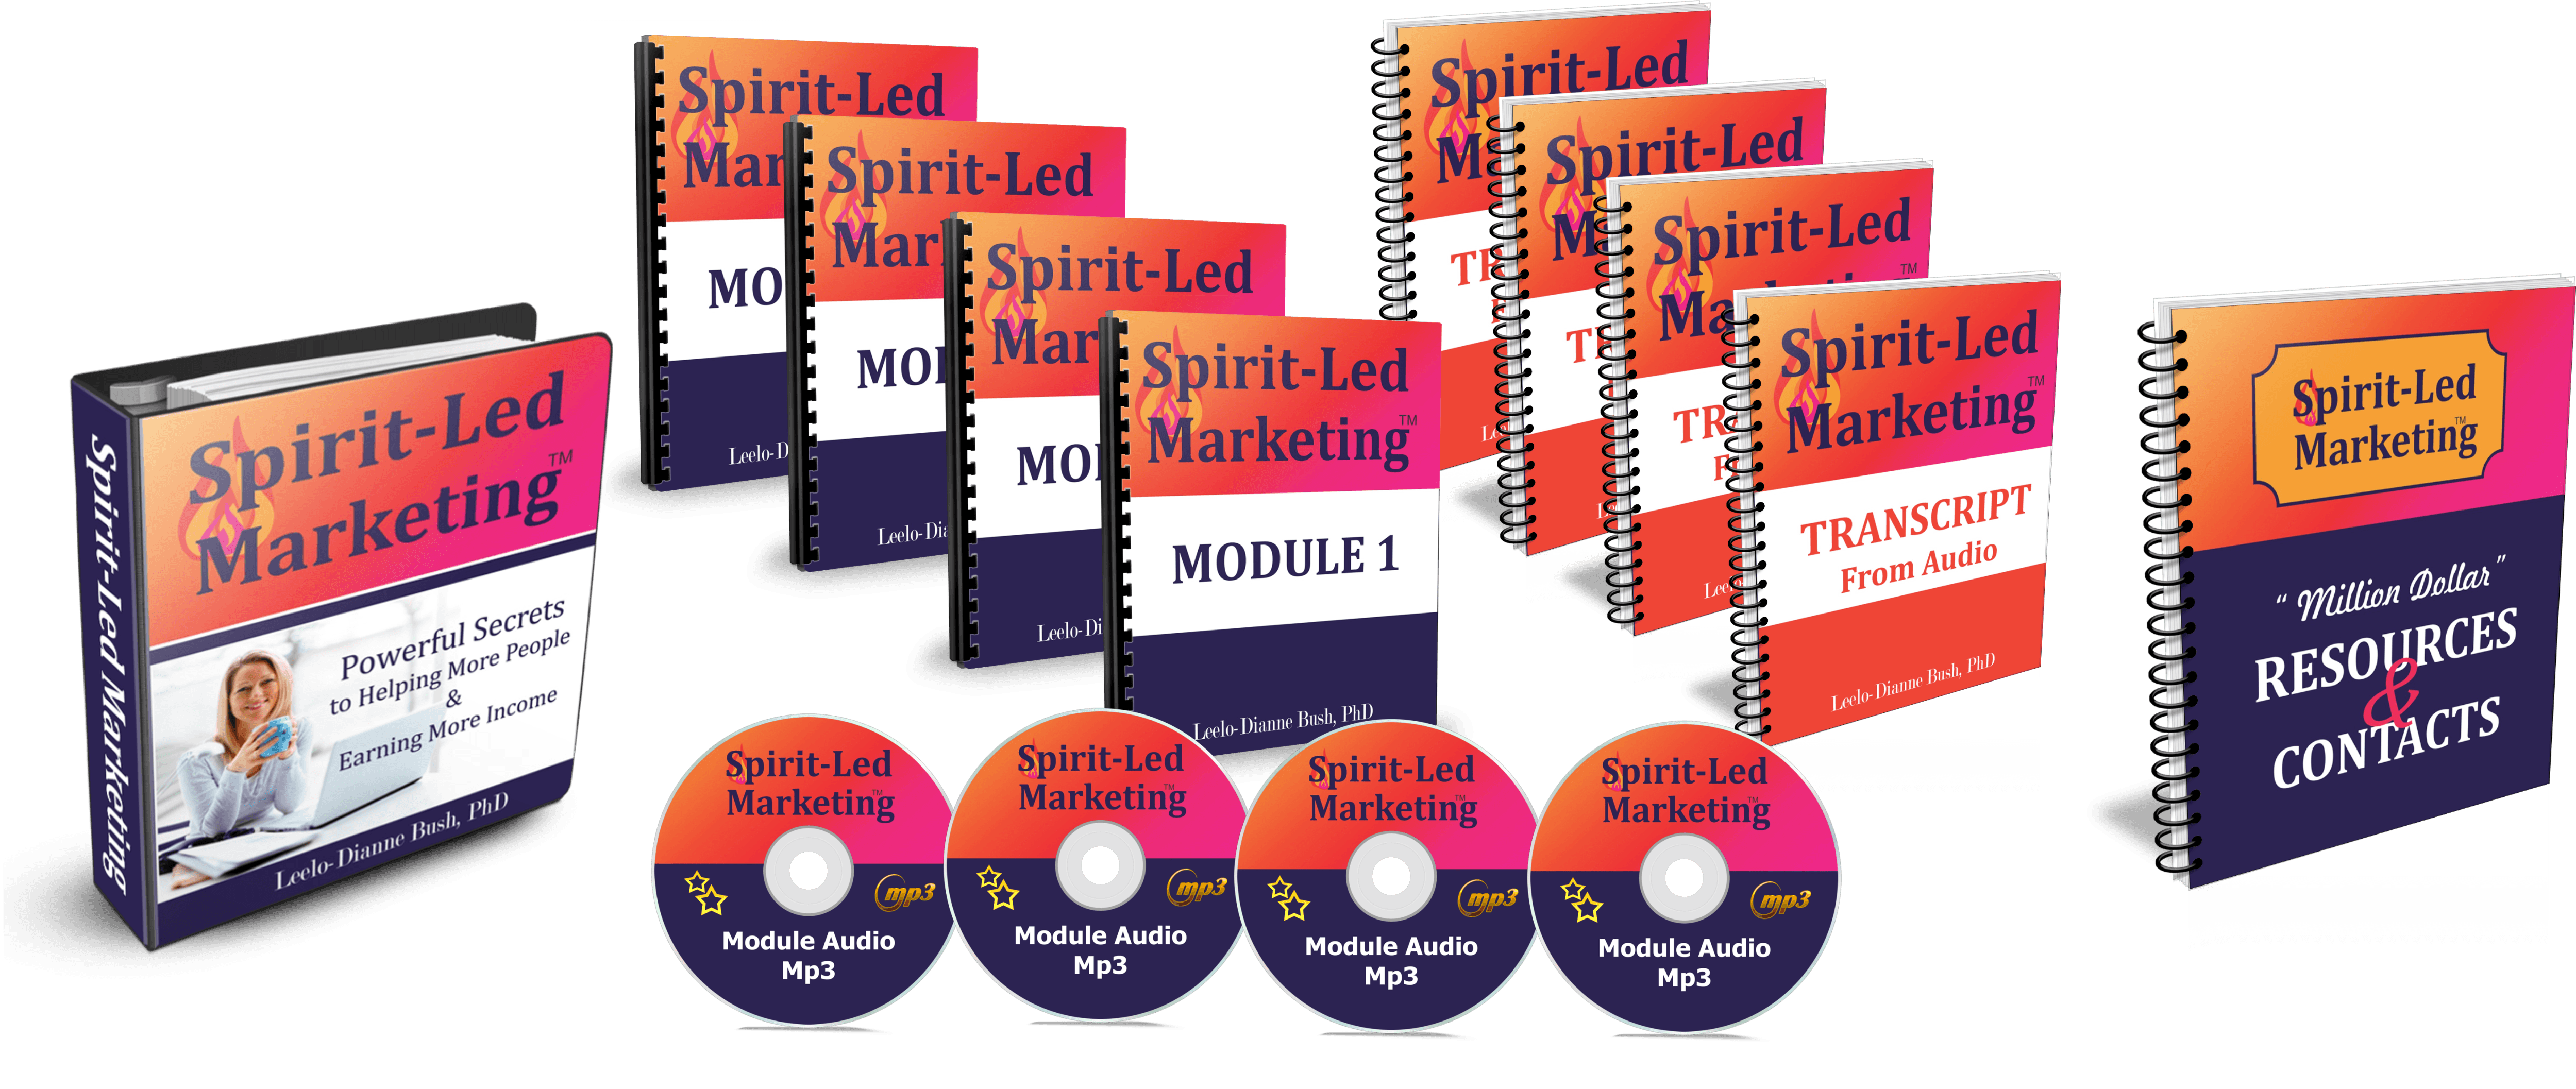 Spirit Led Marketing course by Leelo Bush PhD